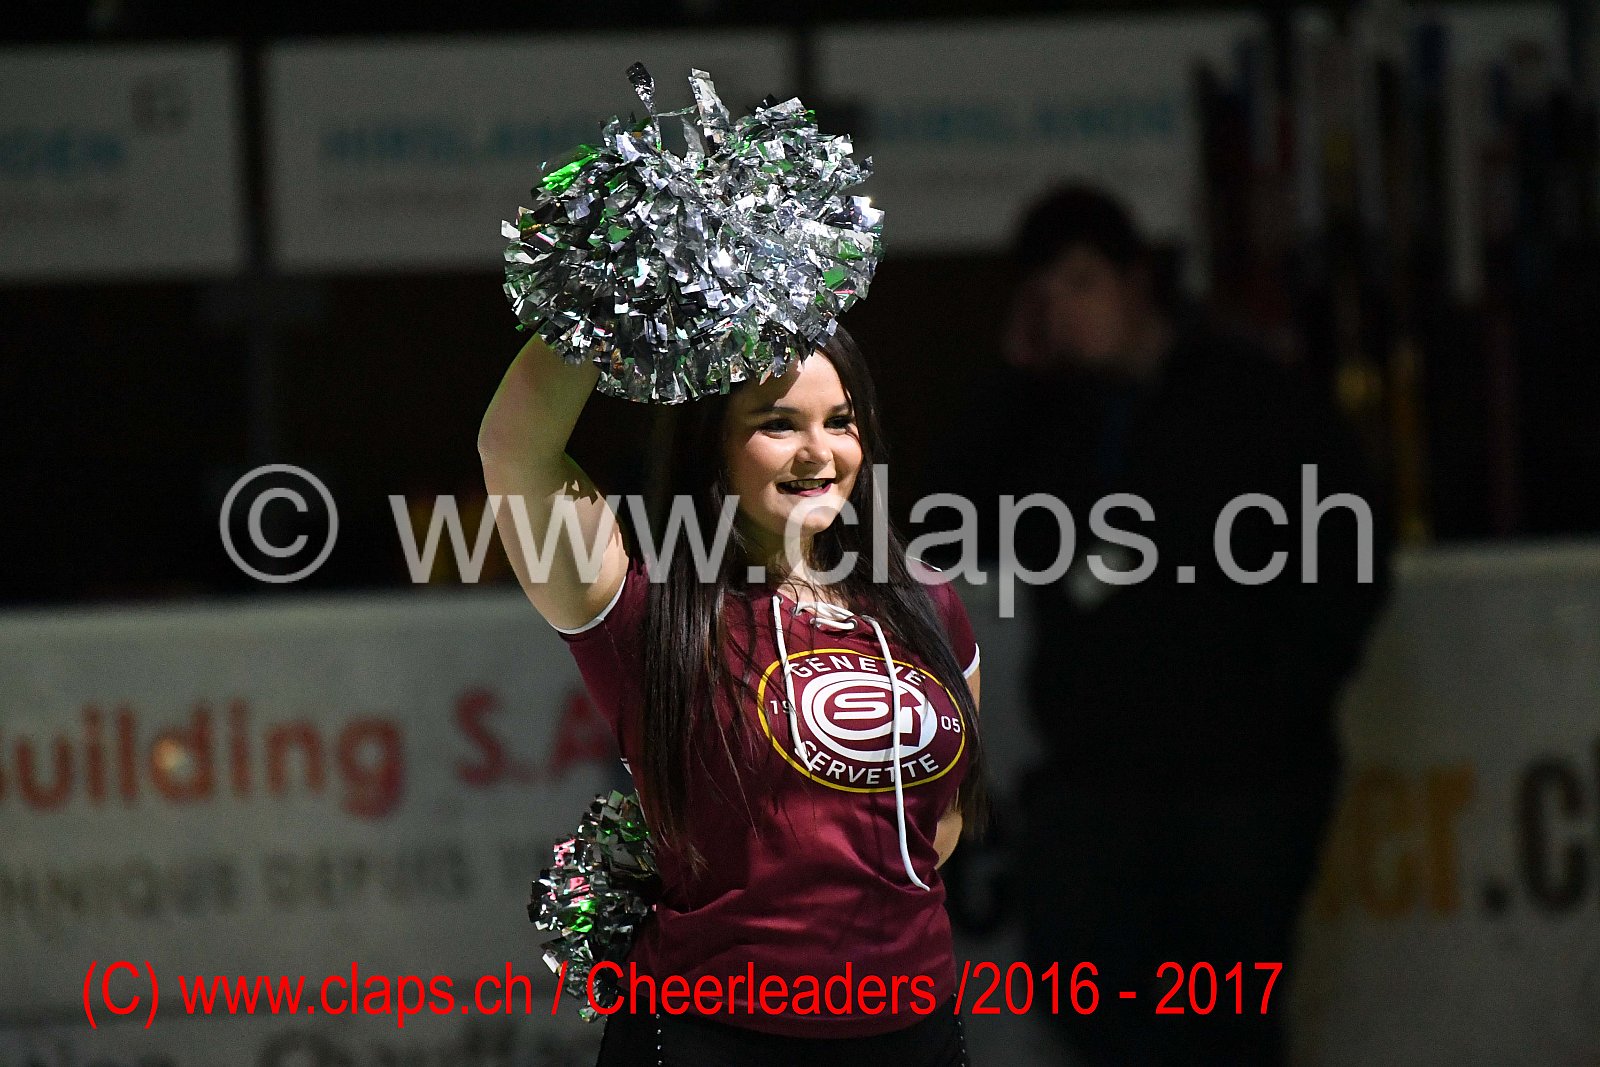 GSHC - AMBRI - Cheerleaders 2016-2017